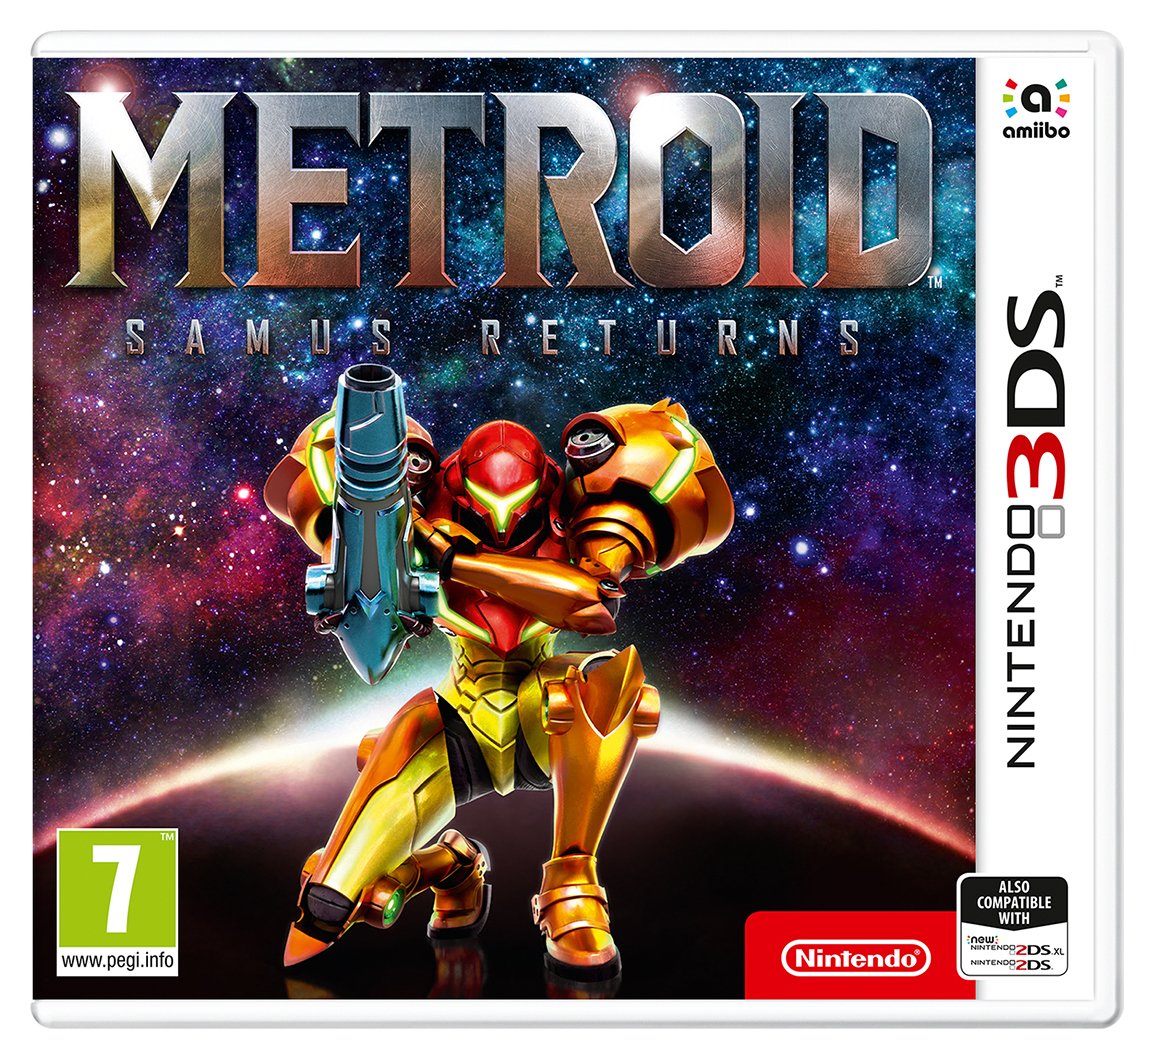 Metroid II: Return of Samus Nintendo 3DS Pre-Order Game.